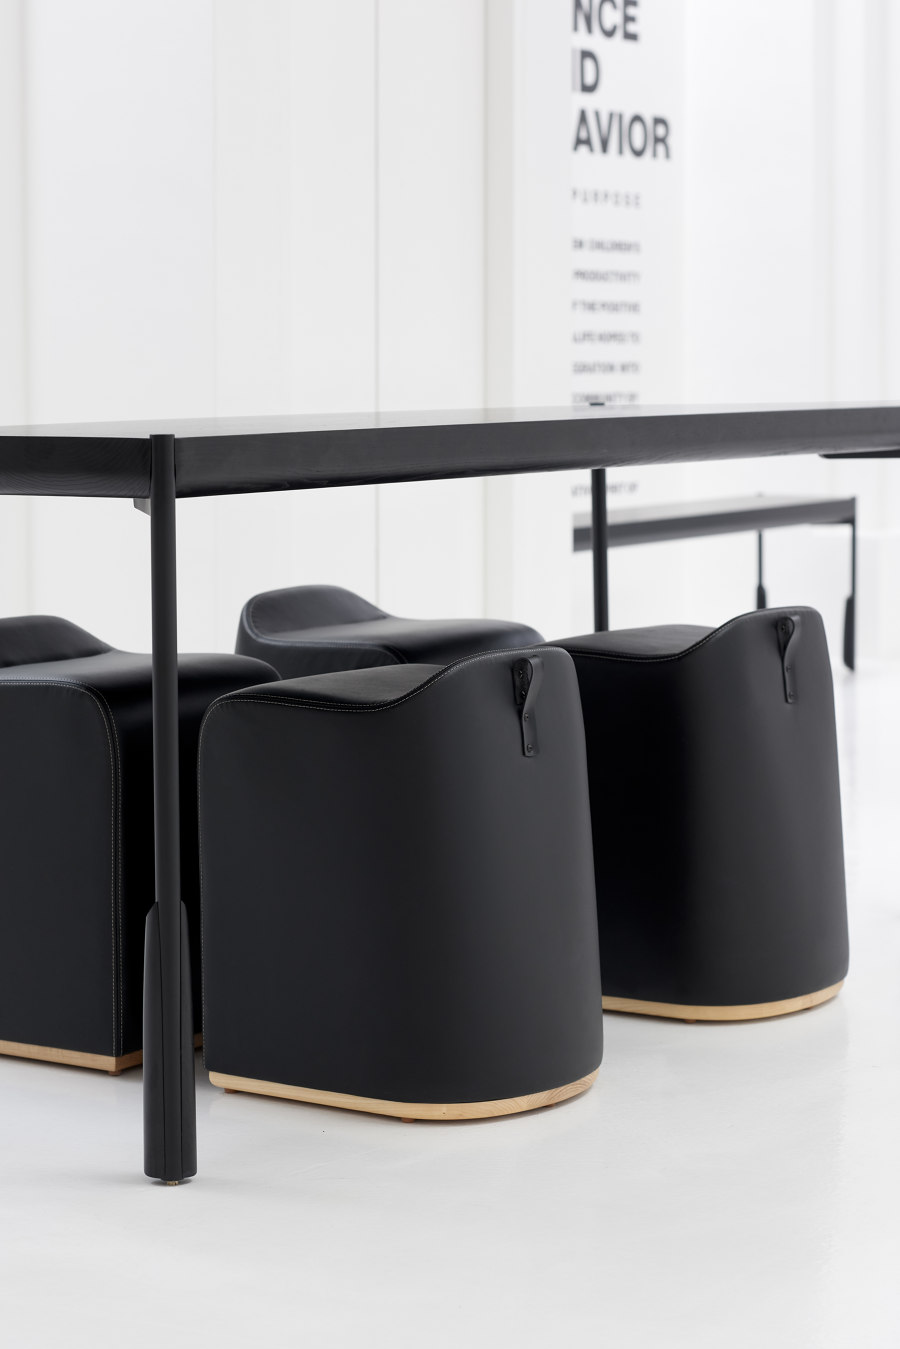 American furniture manufacturer Skram shows how modern, sustainable luxury works | News